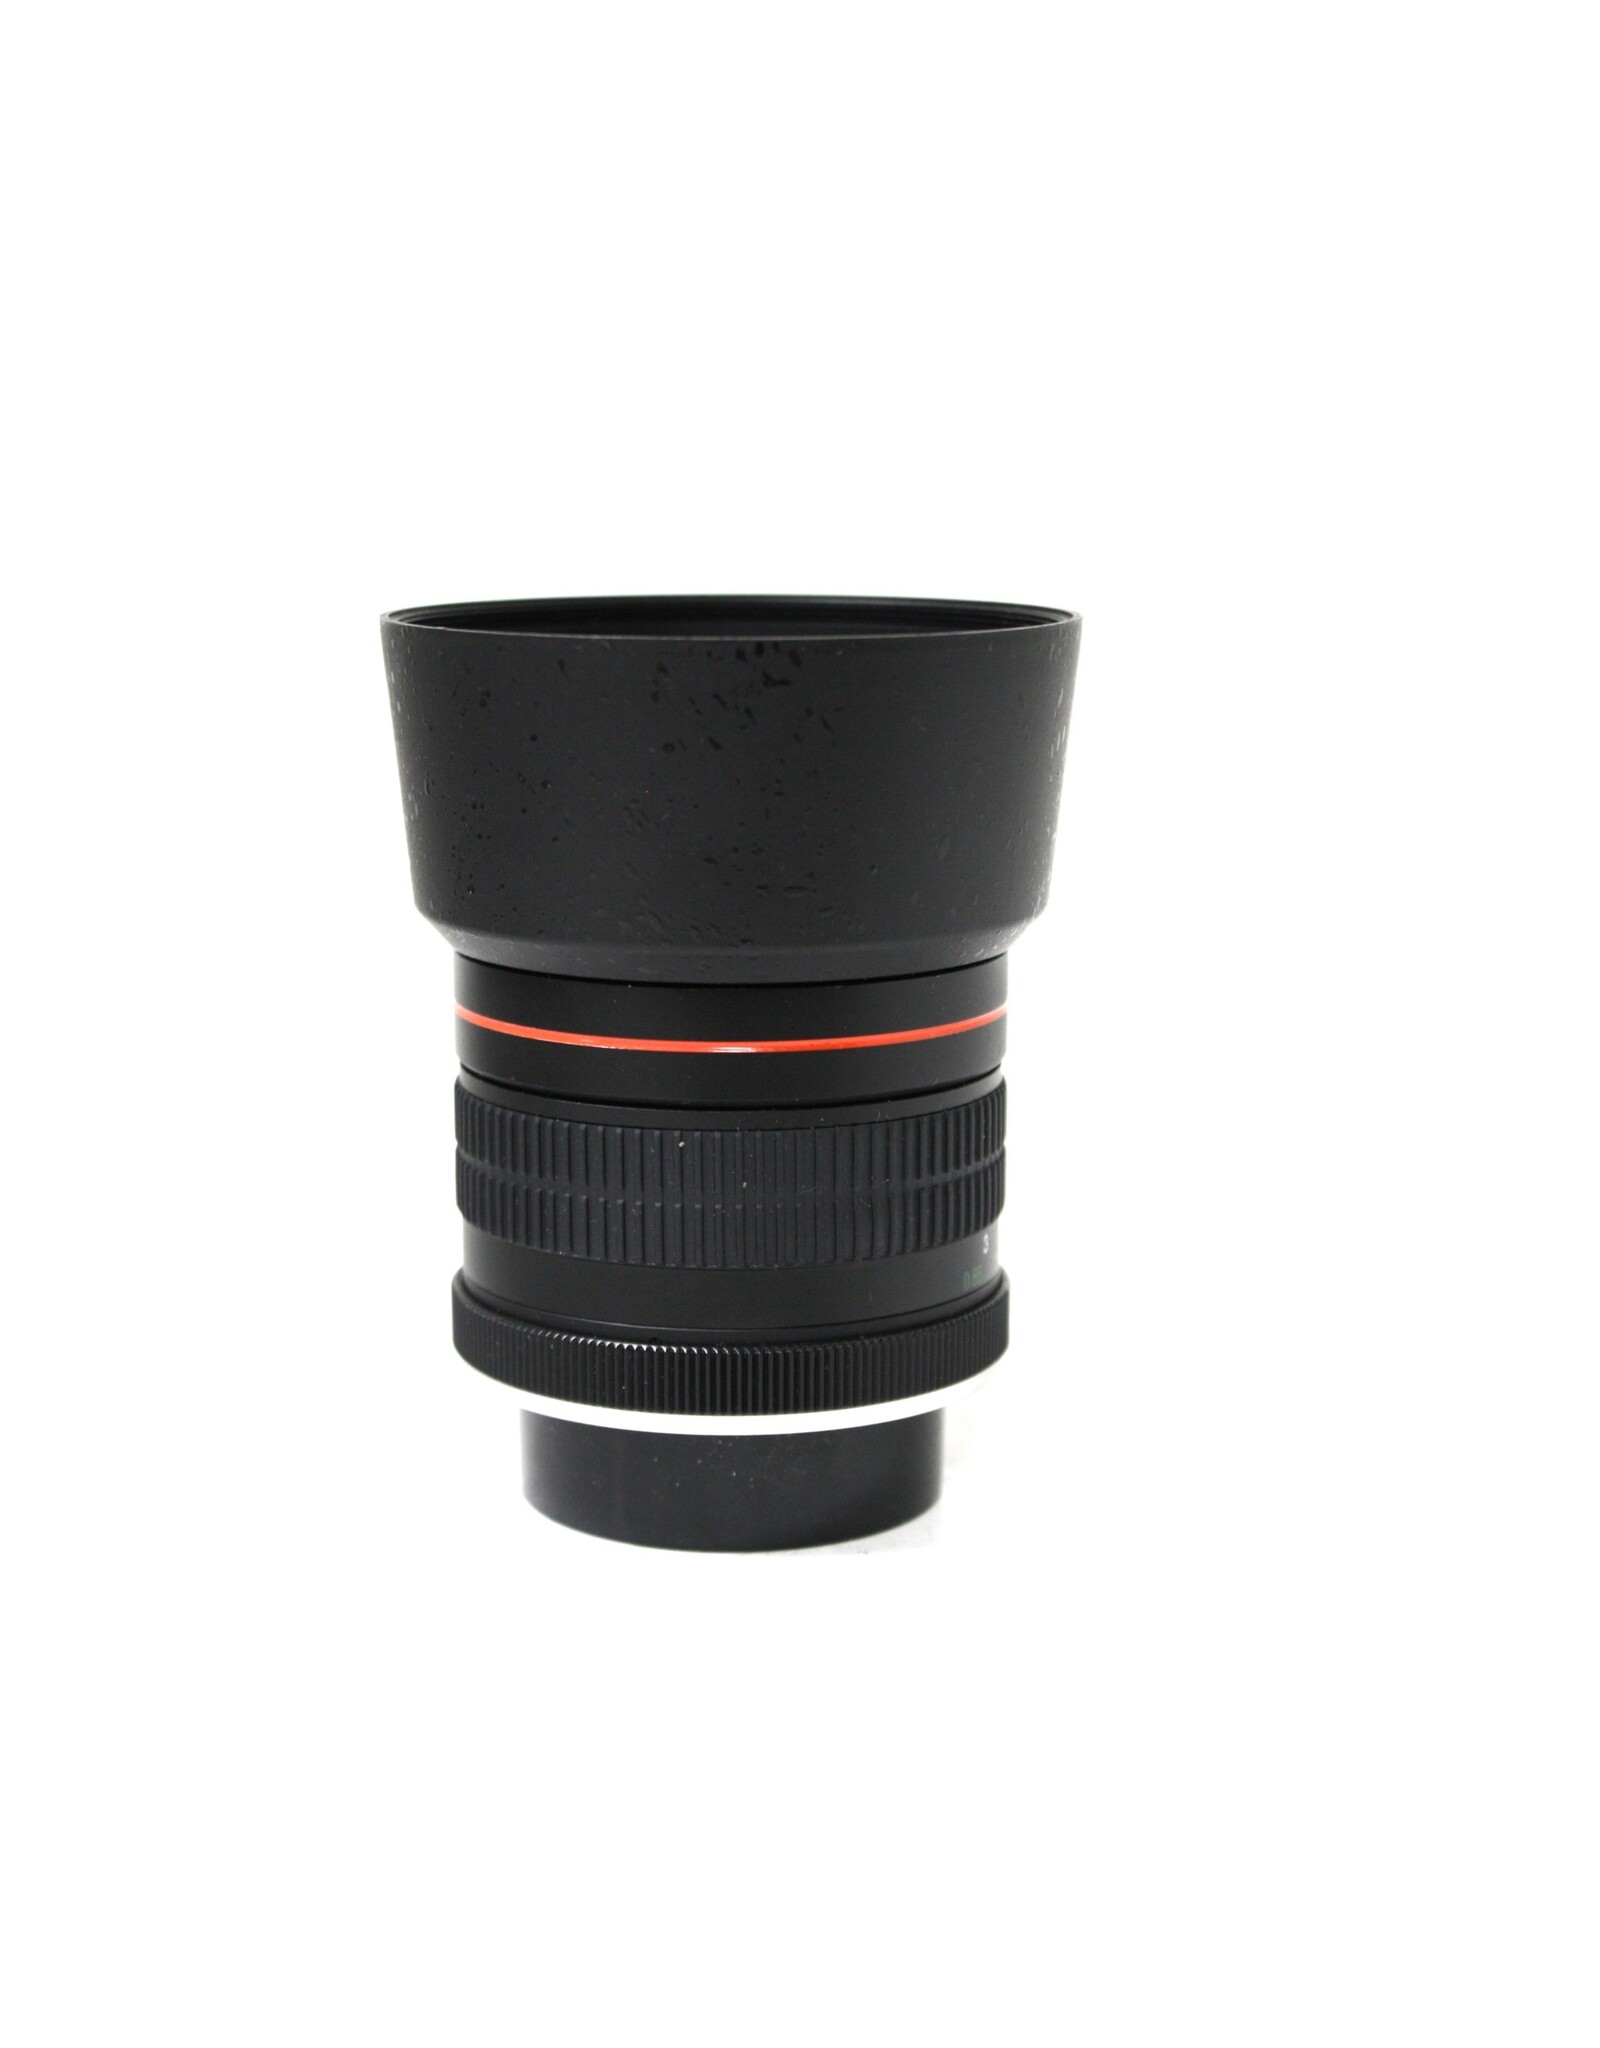 Lightdow 85mm f1.8 Four-Thirds Manual Focus Full Frame Portrait Lens